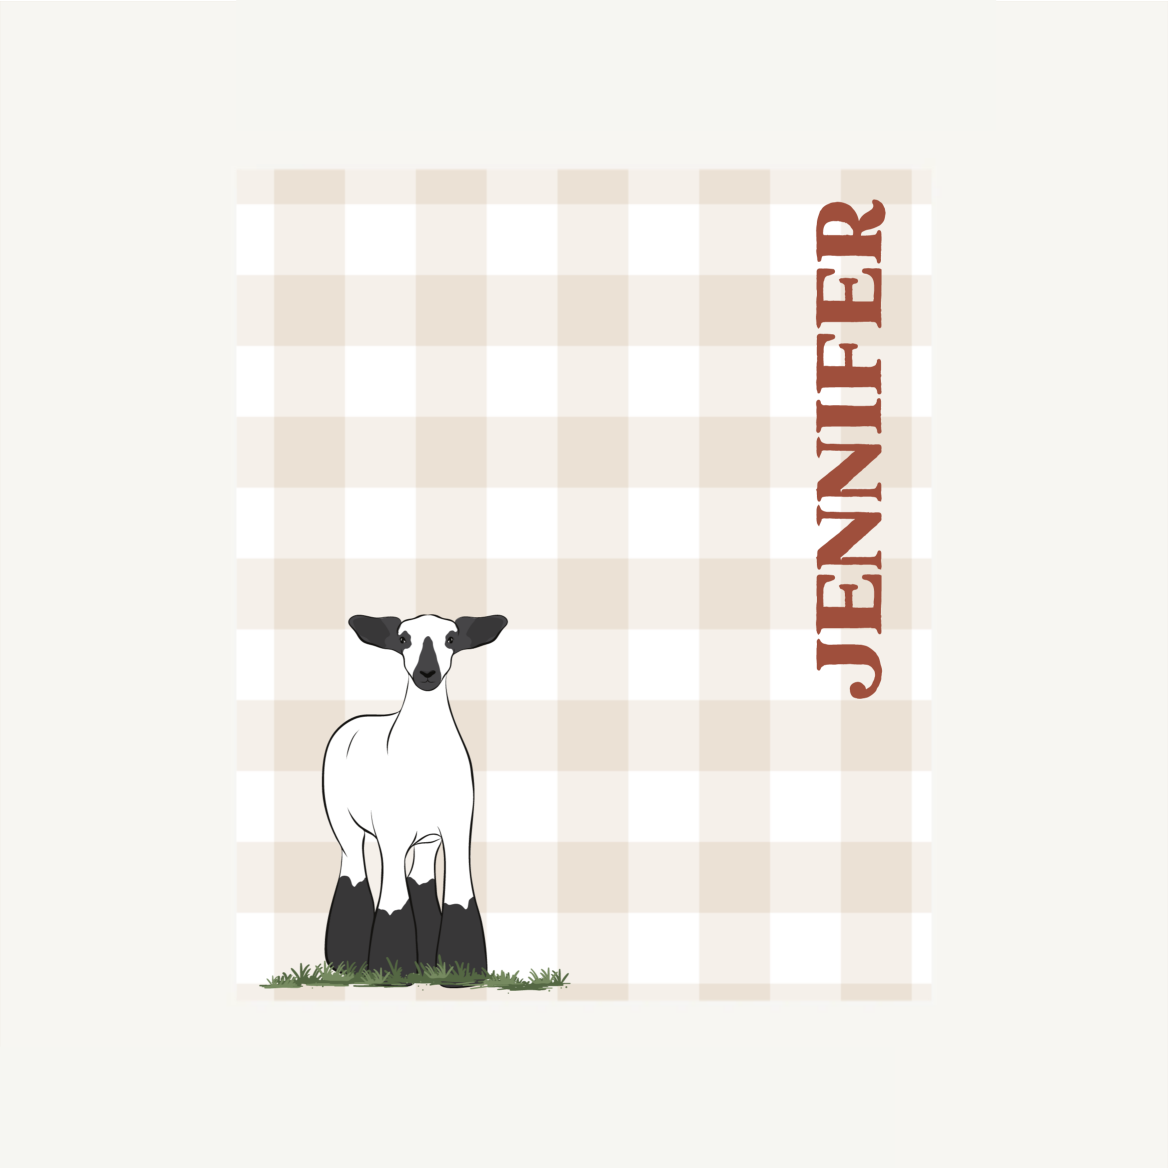 Personalized-Livestock-Fleece Blanket - Gingham Pattern